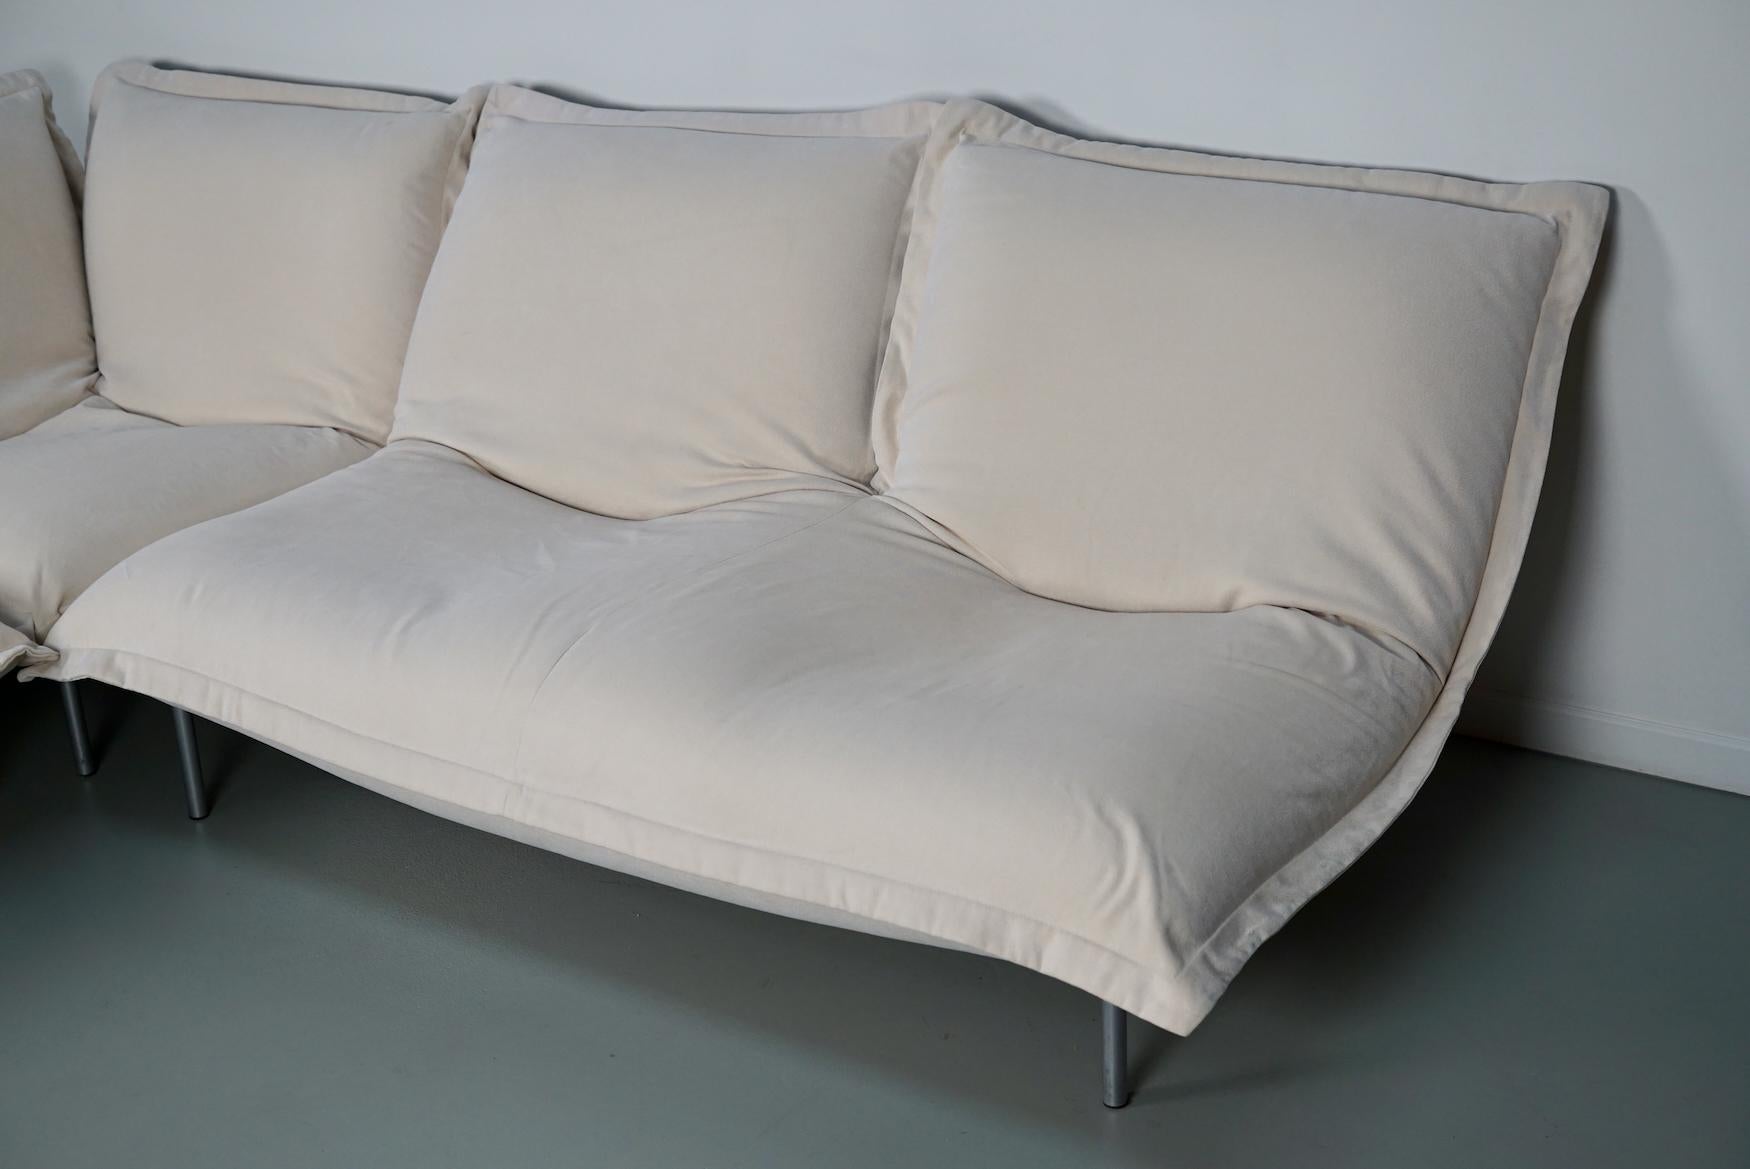 Fabric Calin Corner Sofa Set by Pascal Mourgue for Cinna / Ligne Roset - 4 seater